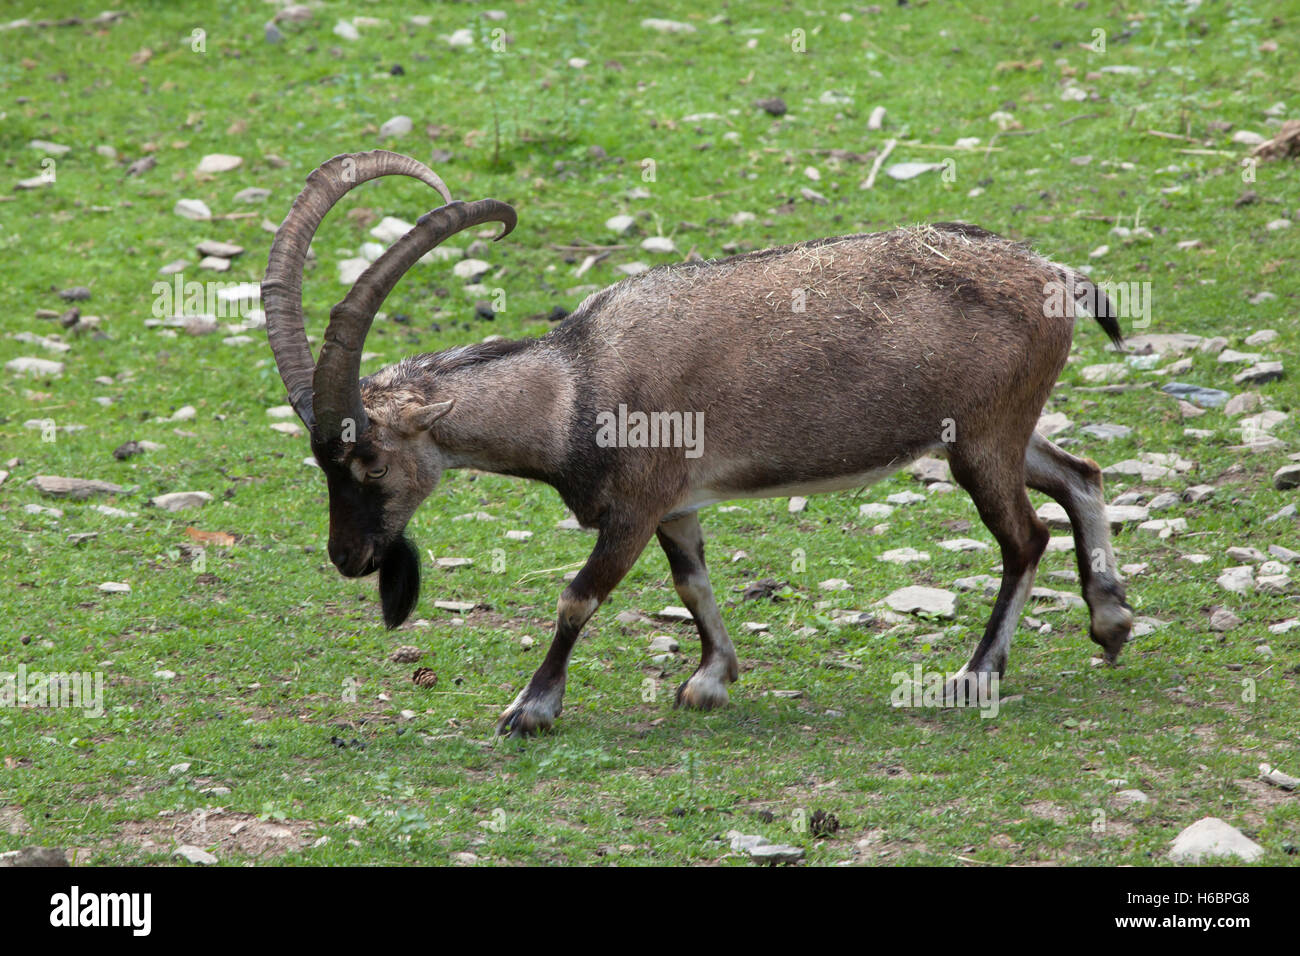 Bezoar ibex (Capra aegagrus aegagrus), also known as the Anatolian Bezoar ibex. Wildlife animal. Stock Photo